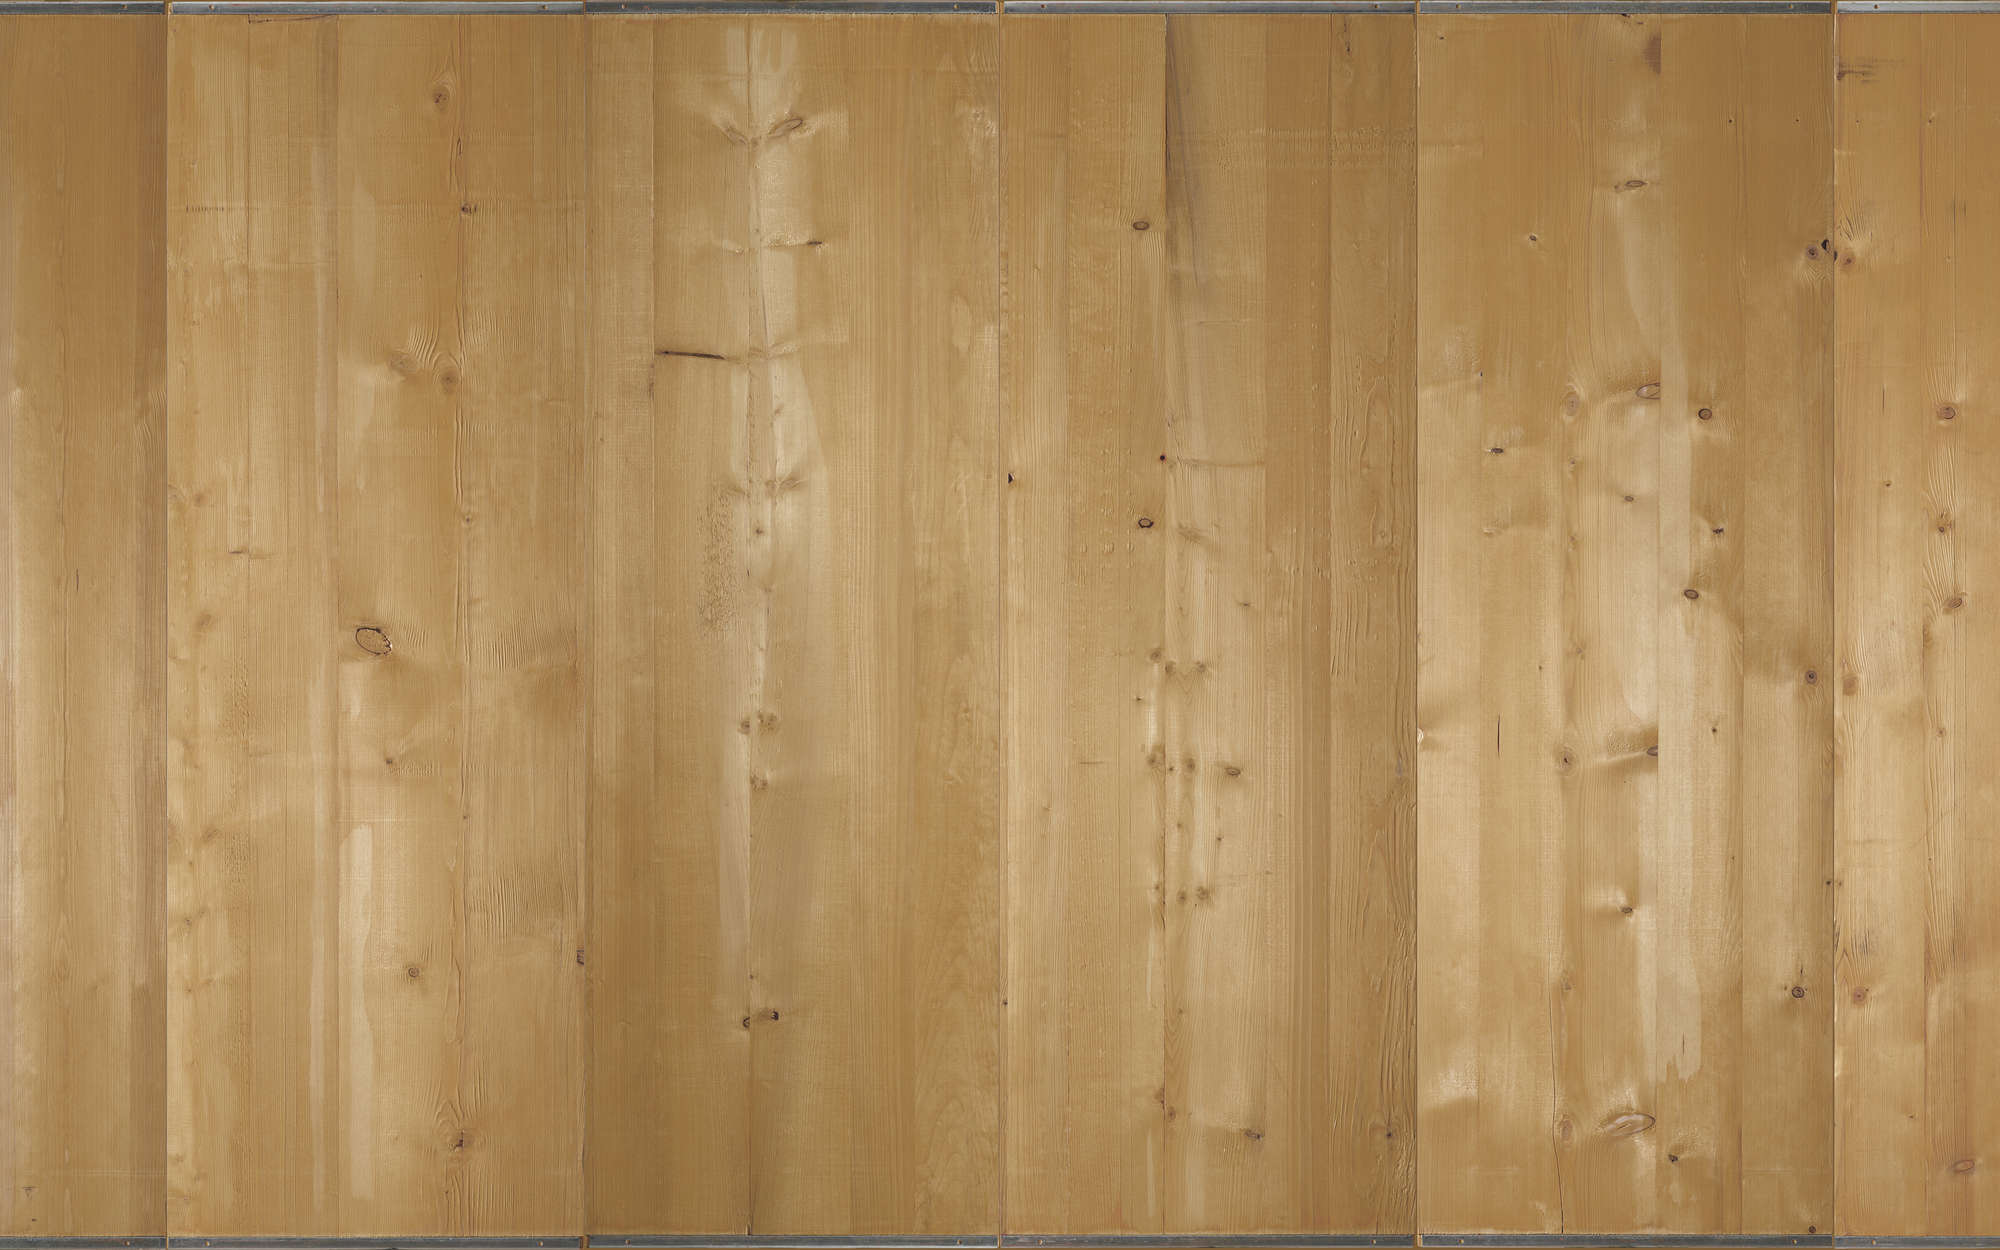             Digital behang licht houten planken - structuurvlies
        